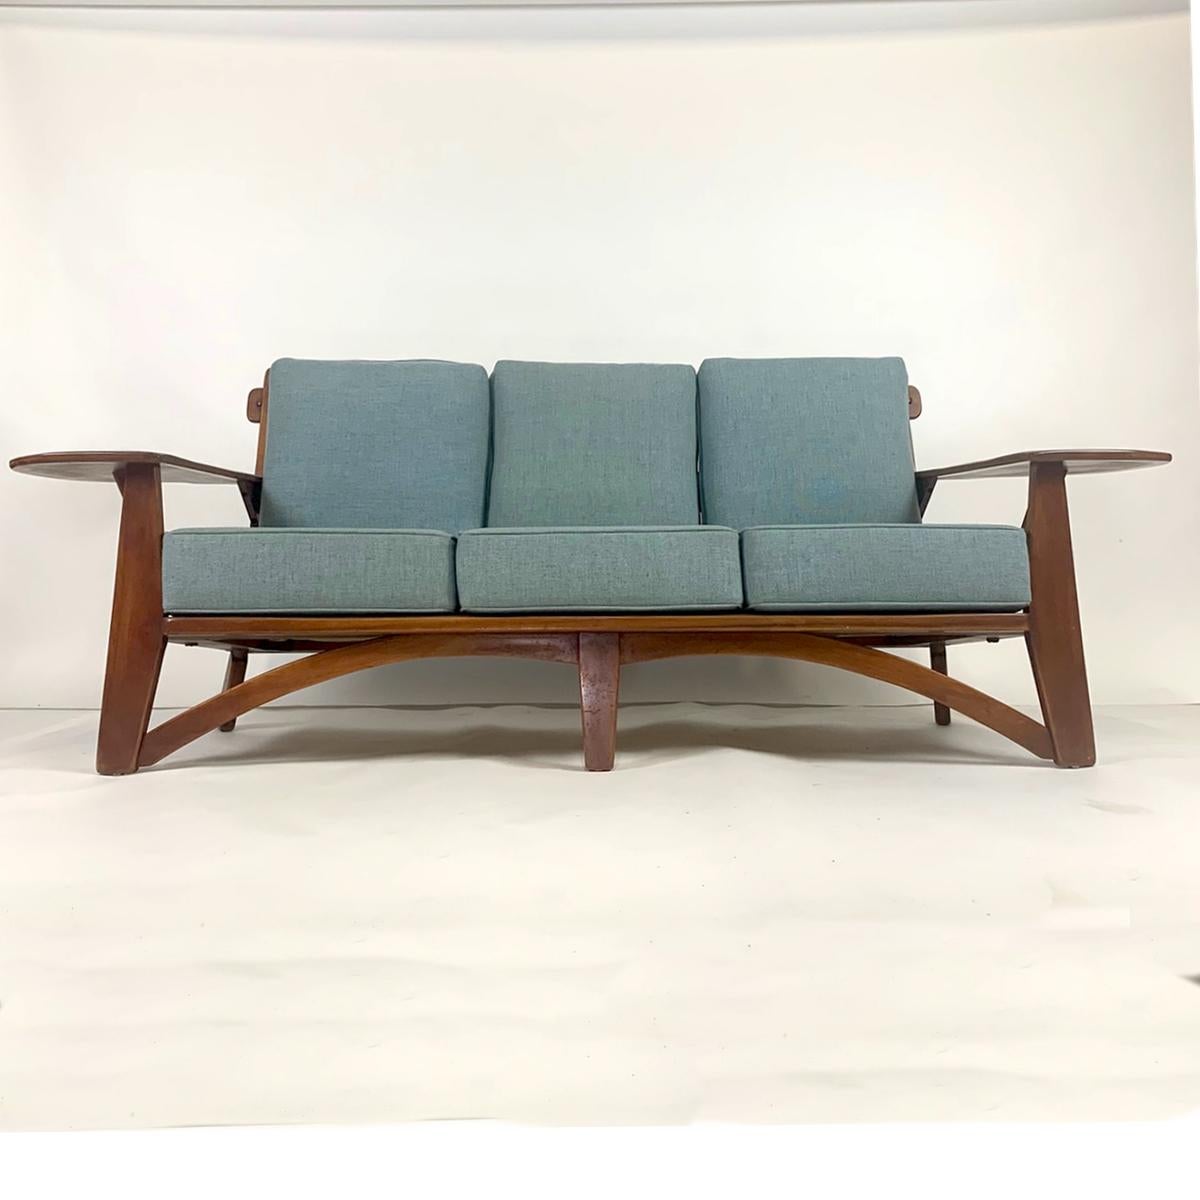 American Craftsman Impressive 1930s Cushman Maple Paddle Arm Sofa Designed by William DeVries